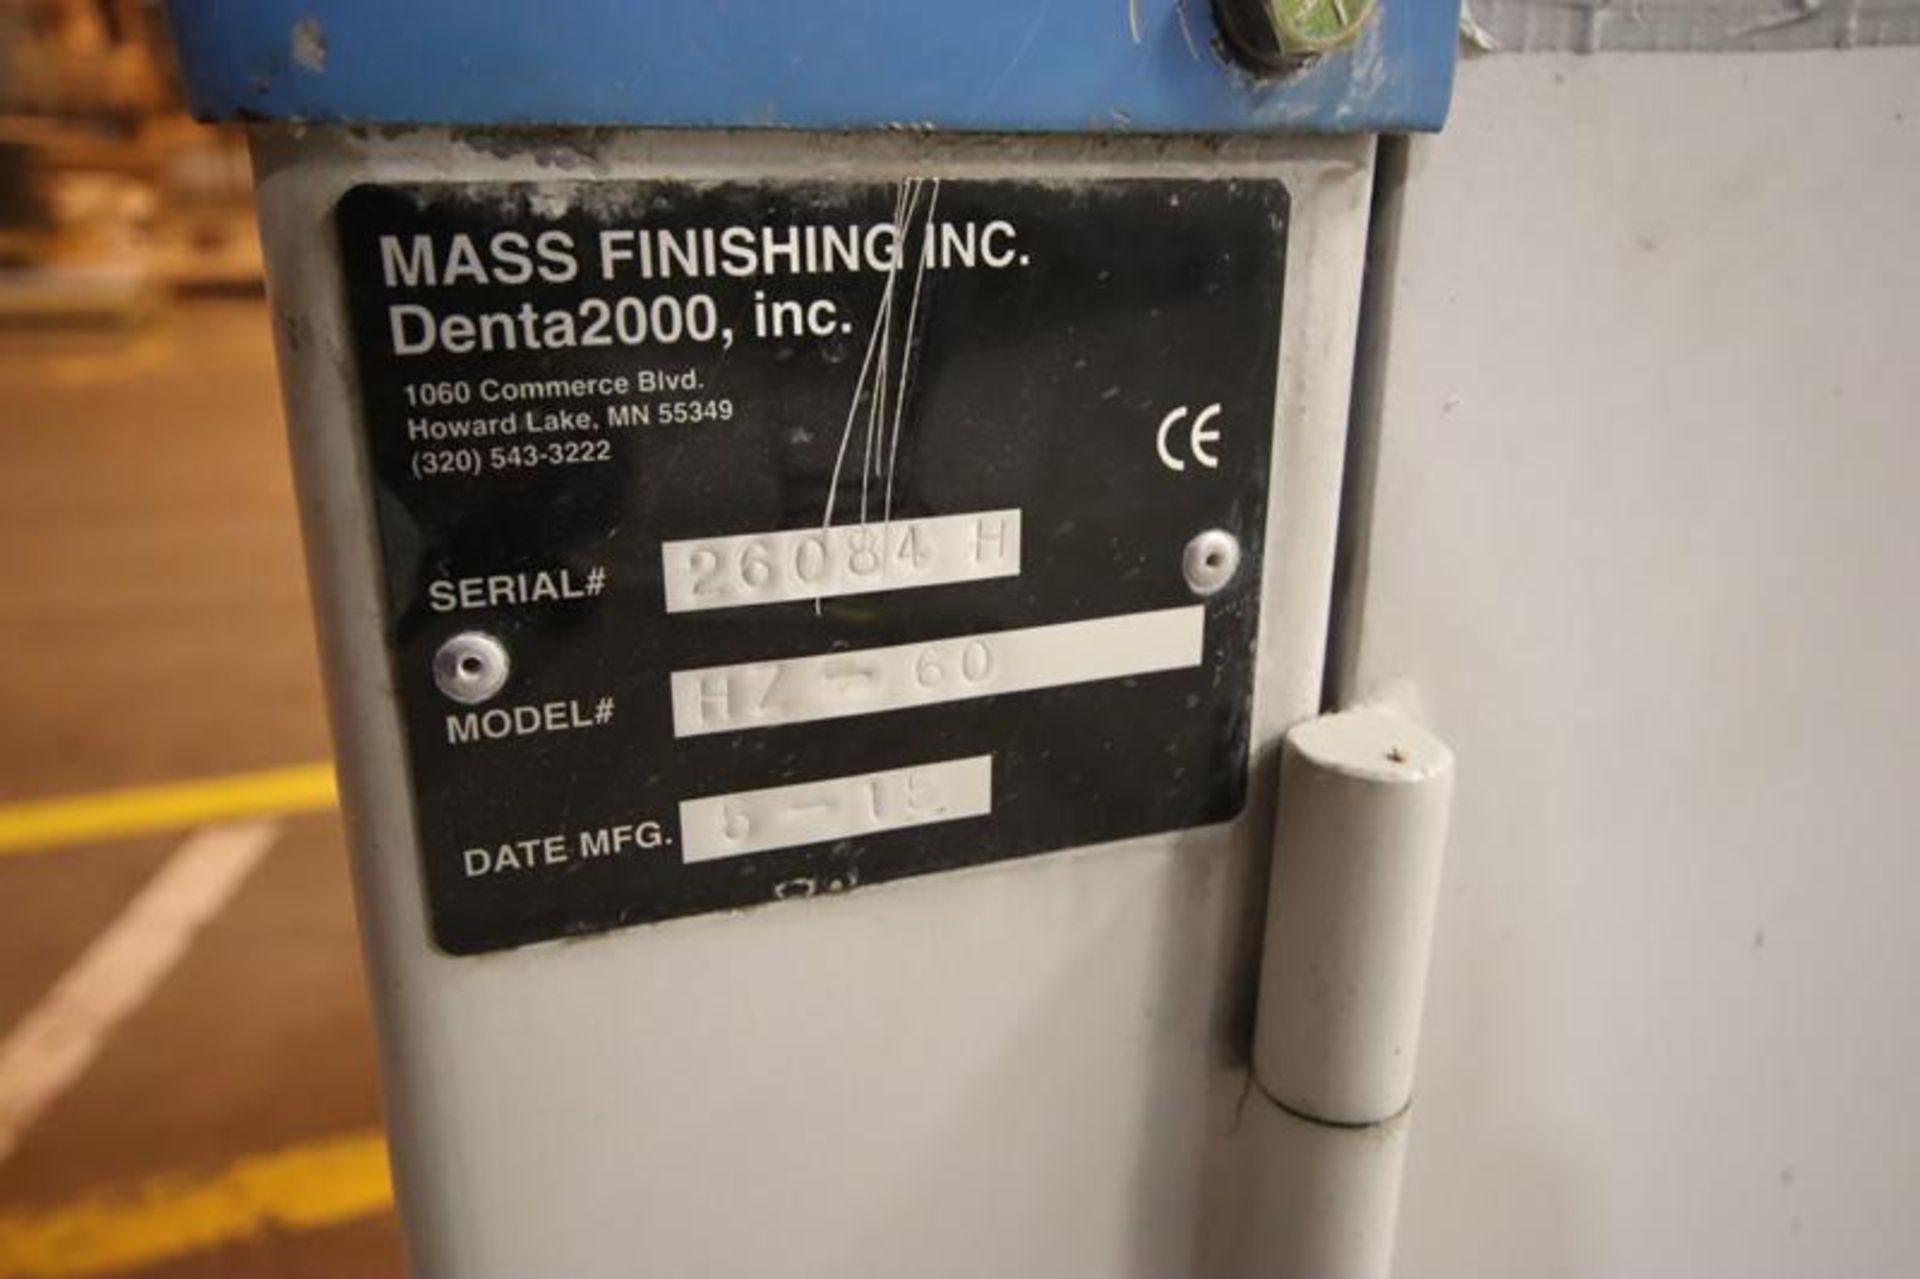 MFI Finisher, Model HZ-60, 4 Station Tumbler Parts Finishing Machines S/N#26084H, Year 2015 - Image 4 of 4